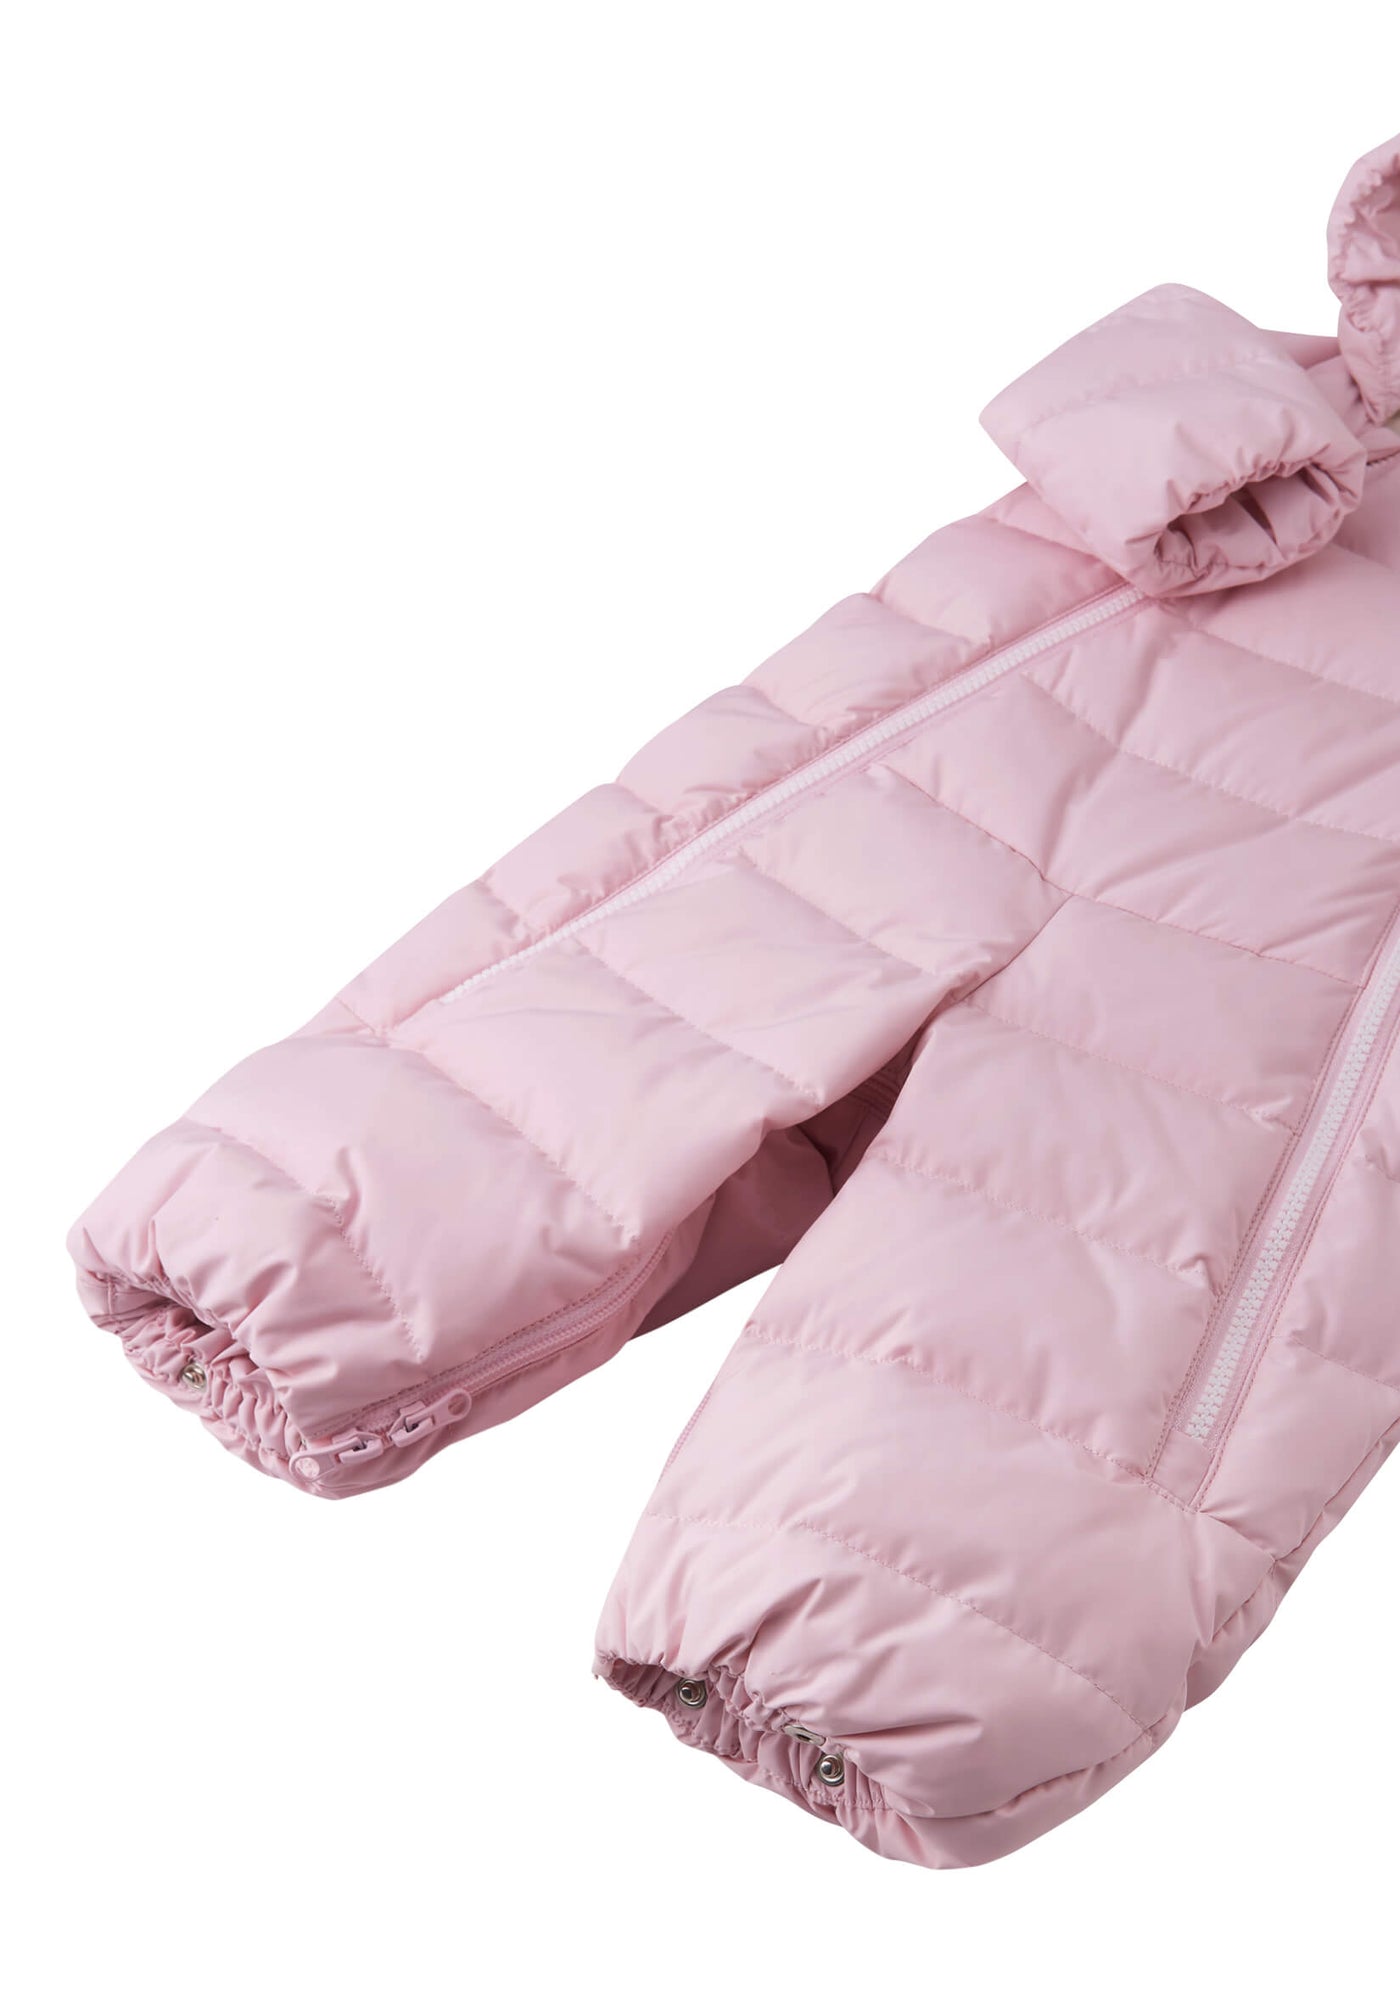 Reima Tilkkanen Down Snow Overall Sleeping Bag